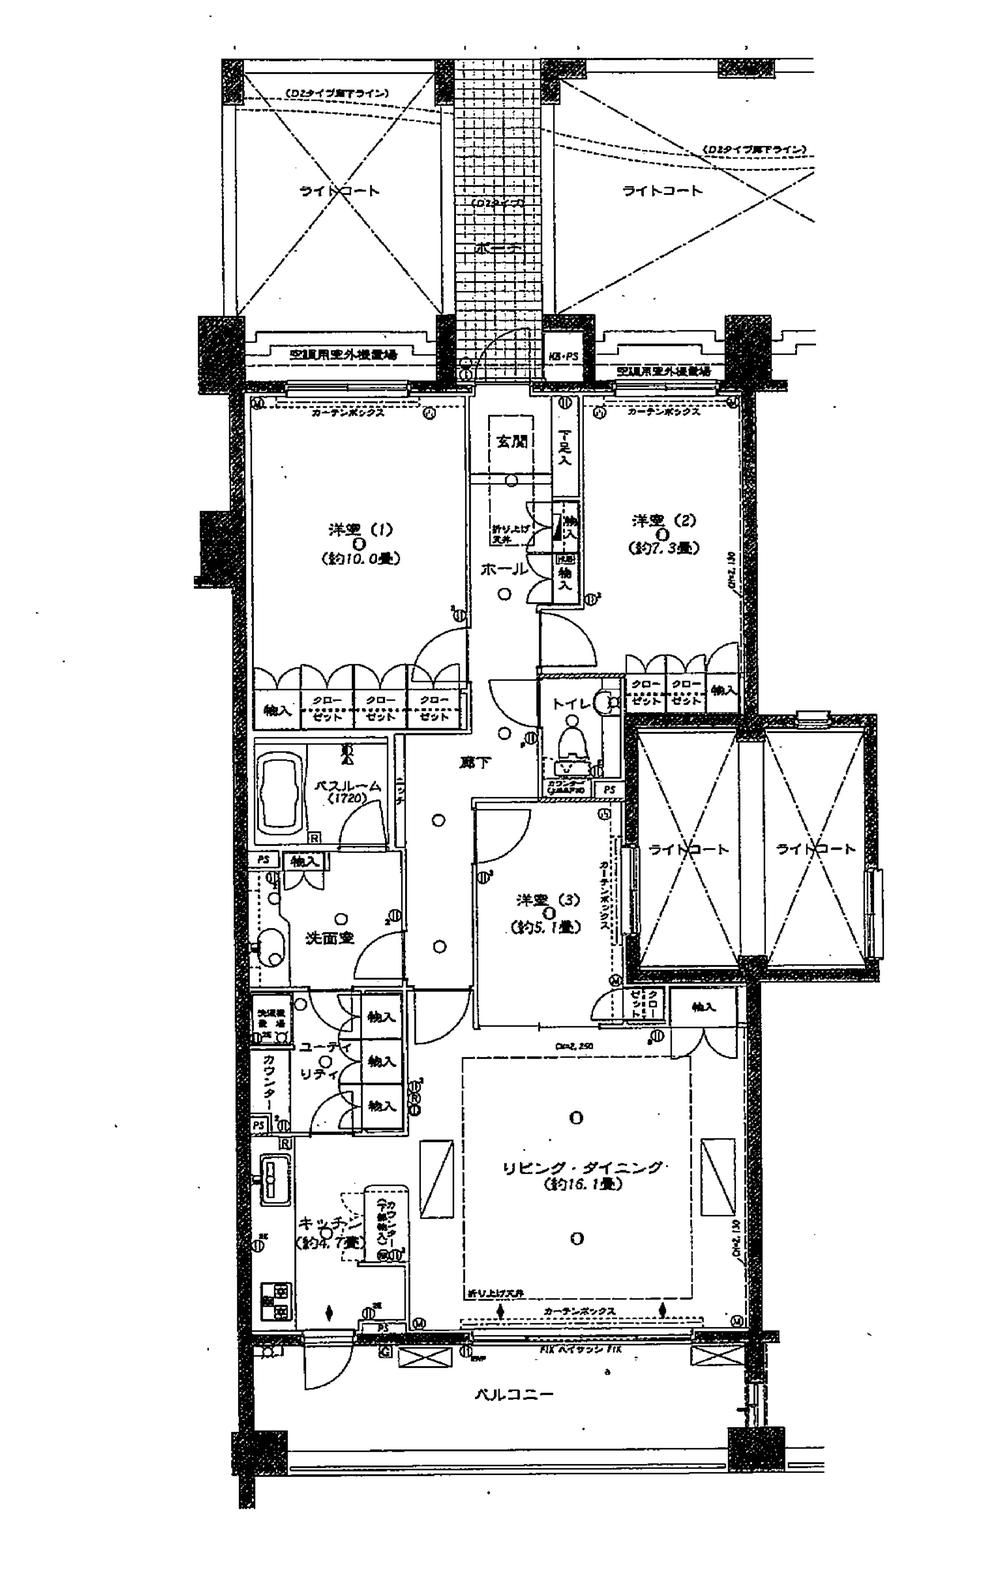 Floor plan. 3LDK, Price 48,500,000 yen, Footprint 106.76 sq m , Balcony area 15.4 sq m